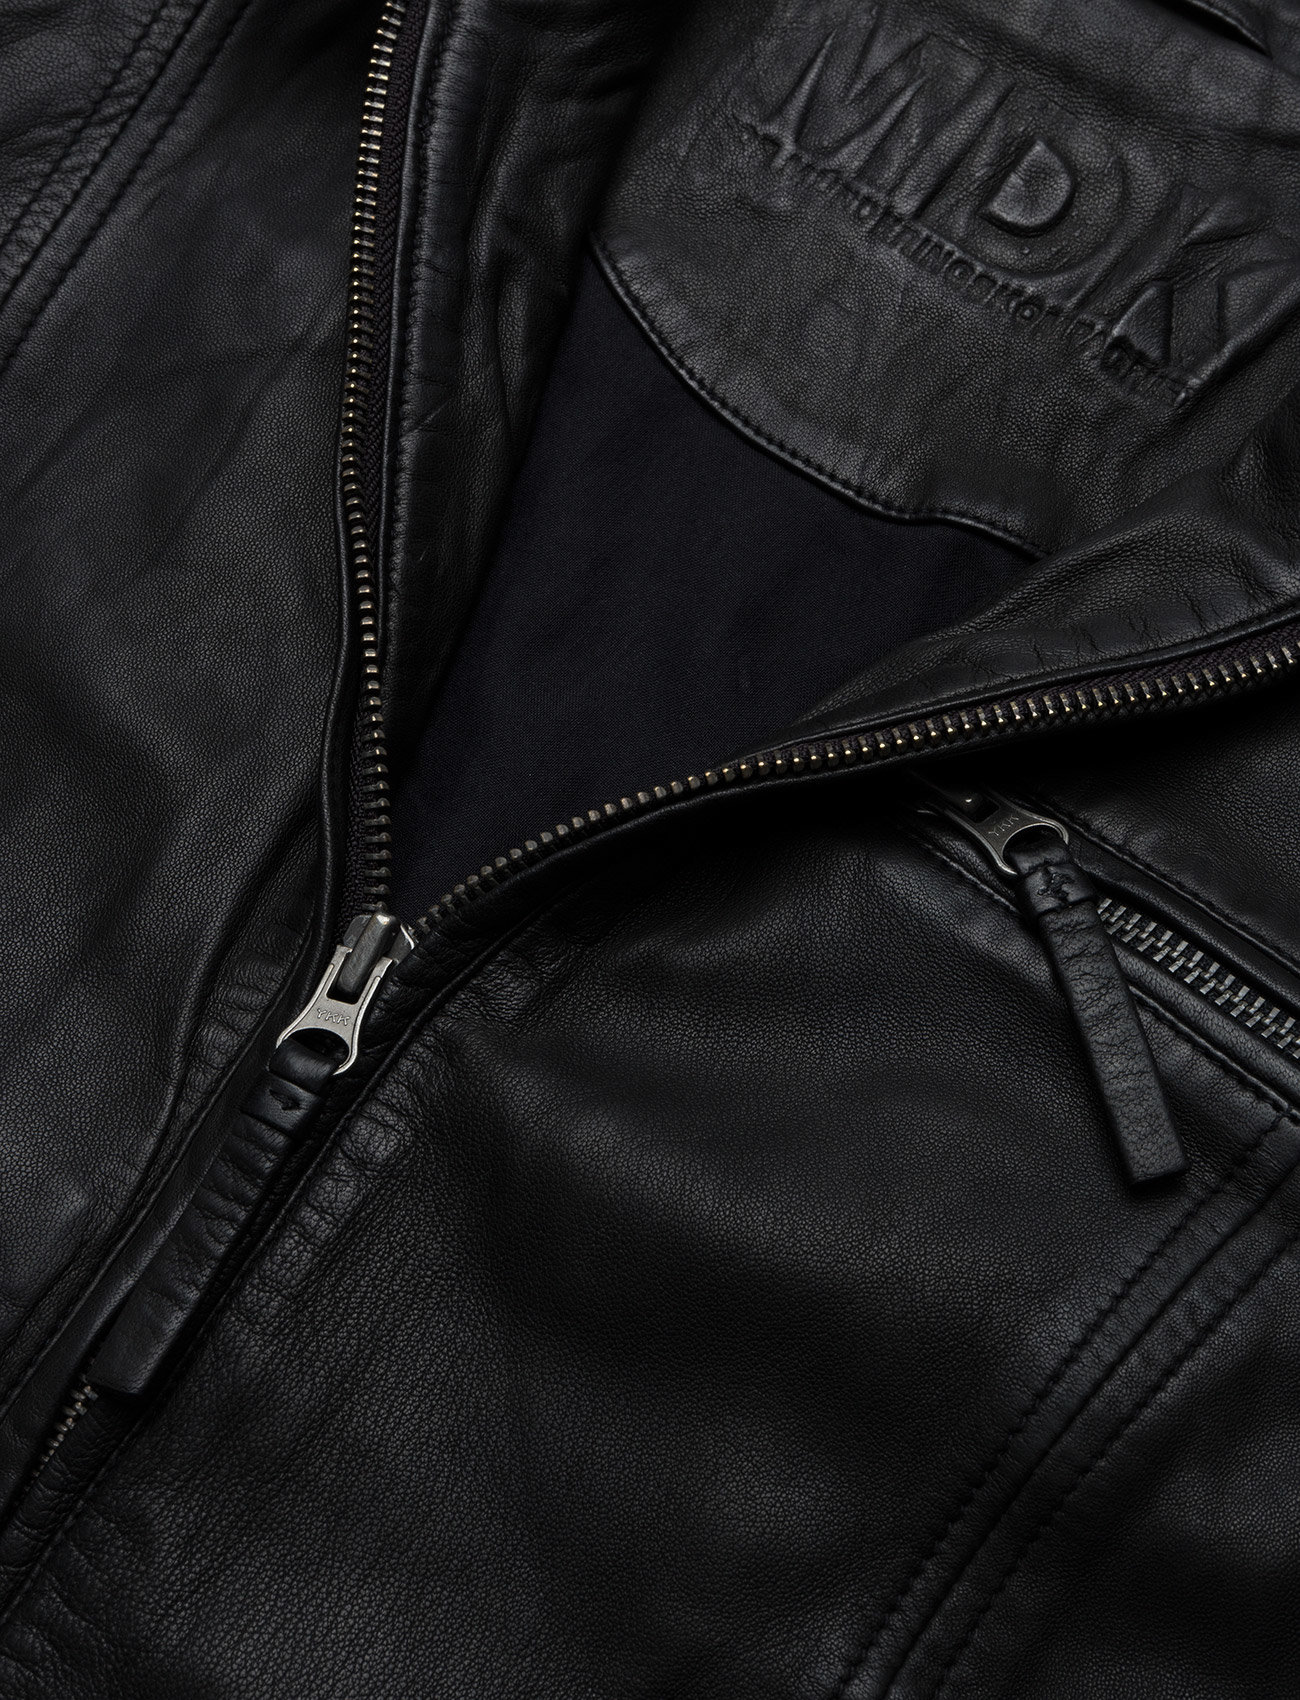 MDK / Munderingskompagniet - Karla Leather Jacket - black - 1